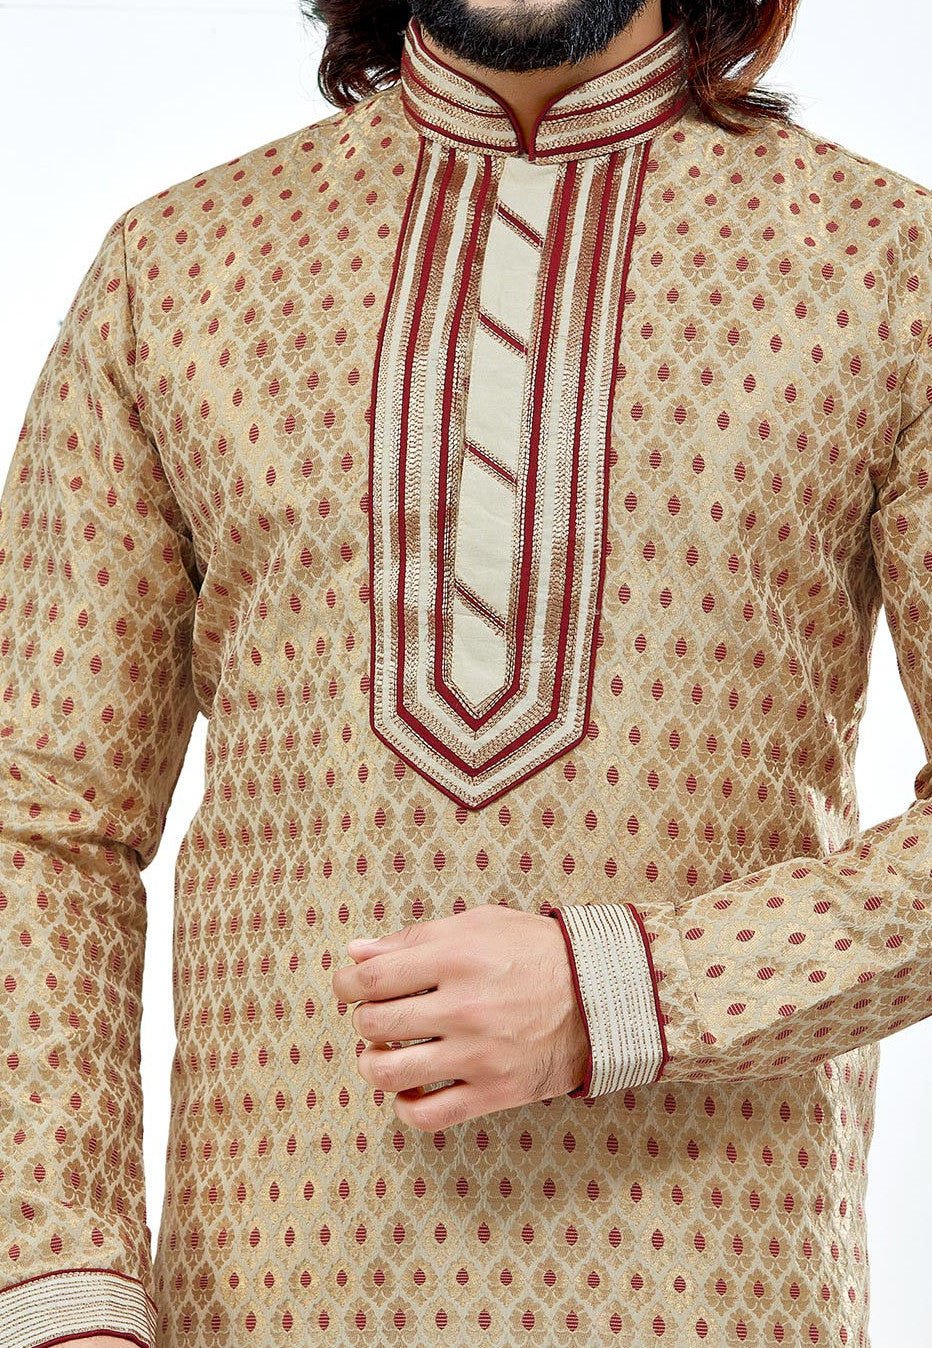 Men’s Traditional Party Wear Jacquard Kurta Pajama - db13741